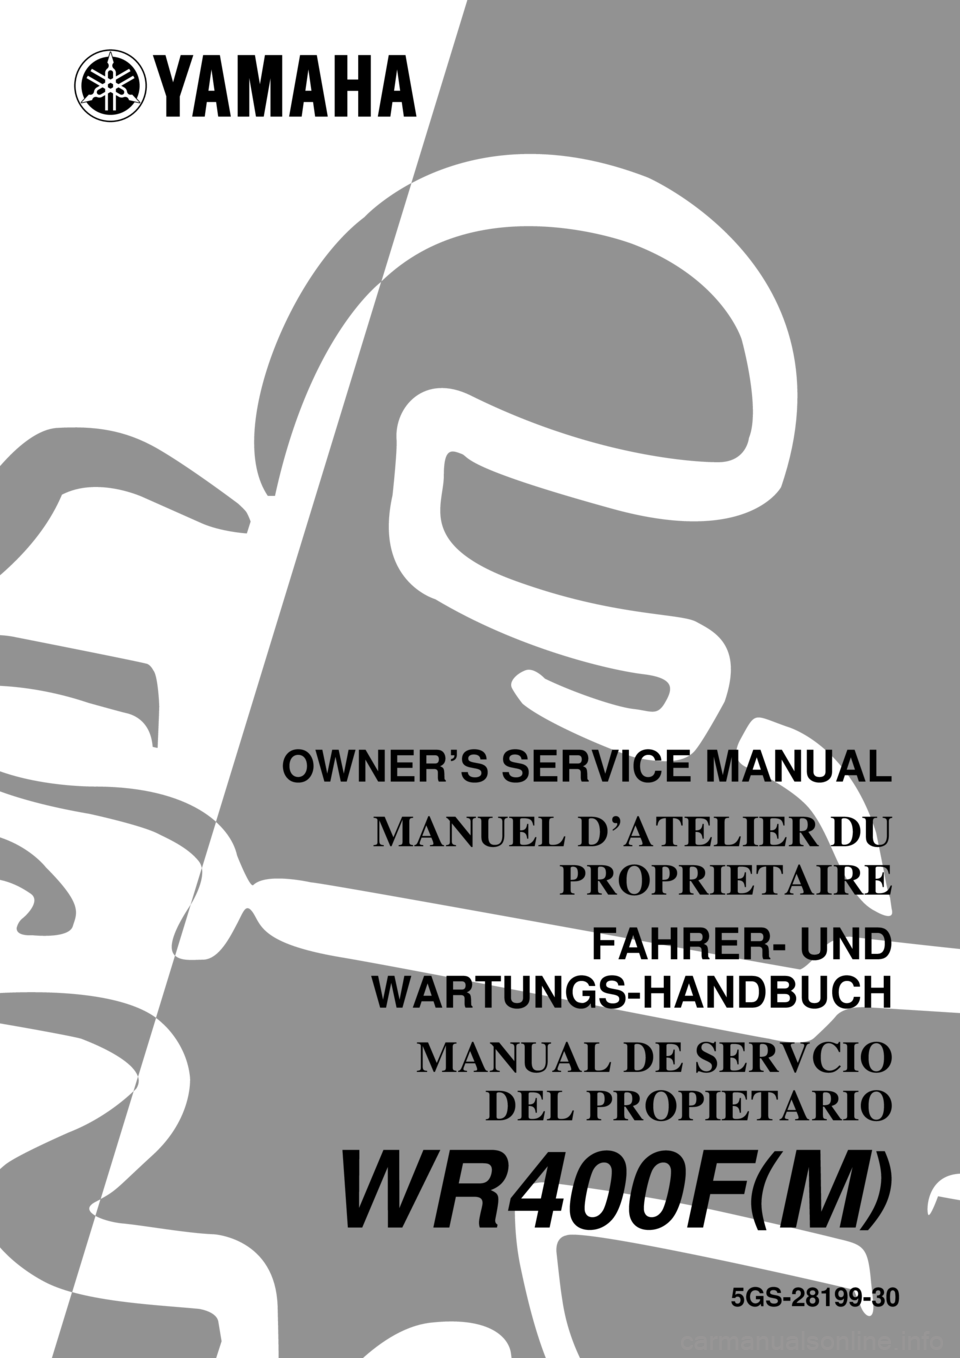 YAMAHA WR 400F 2000  Manuale duso (in Italian) 5GS-28199-30
WR400F(M)
OWNER’S SERVICE MANUAL
MANUEL D’ATELIER DU
PROPRIETAIRE
FAHRER- UND
WARTUNGS-HANDBUCH
MANUAL DE SERVCIO
DEL PROPIETARIO 